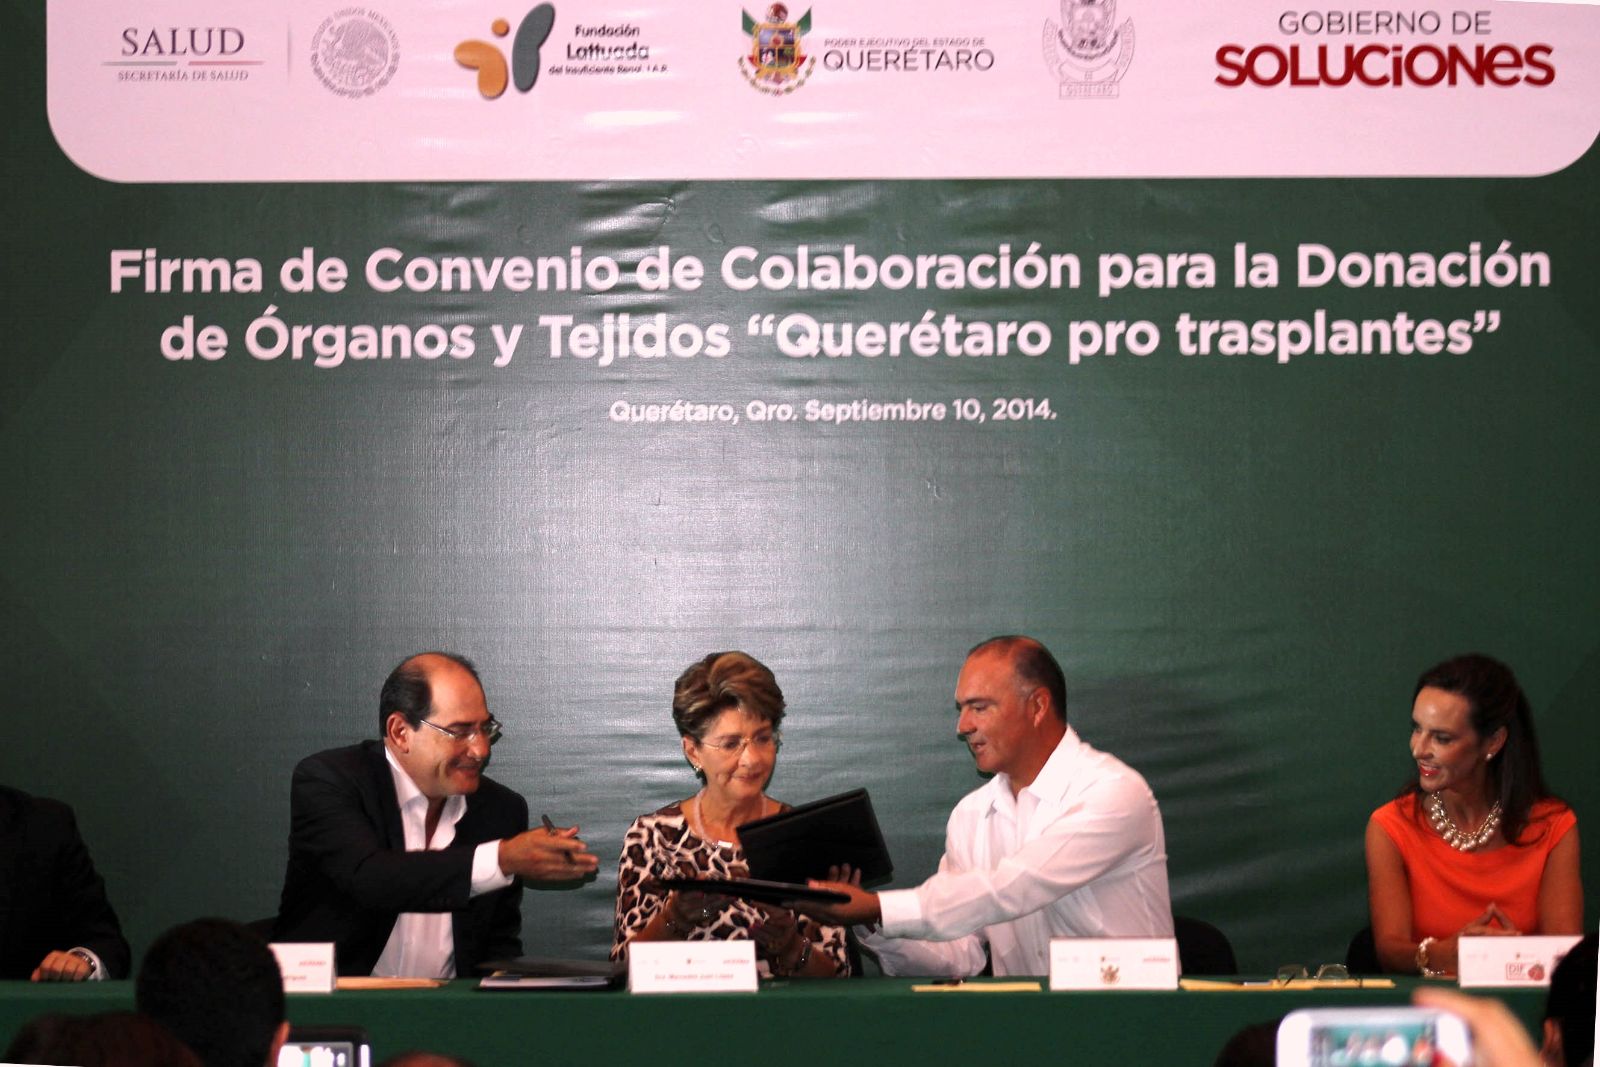 Jorge Lois Rodríguez, Mercedes Juan y José Eduardo Calzada Rovirosa sentados con otra persona firmando un documento